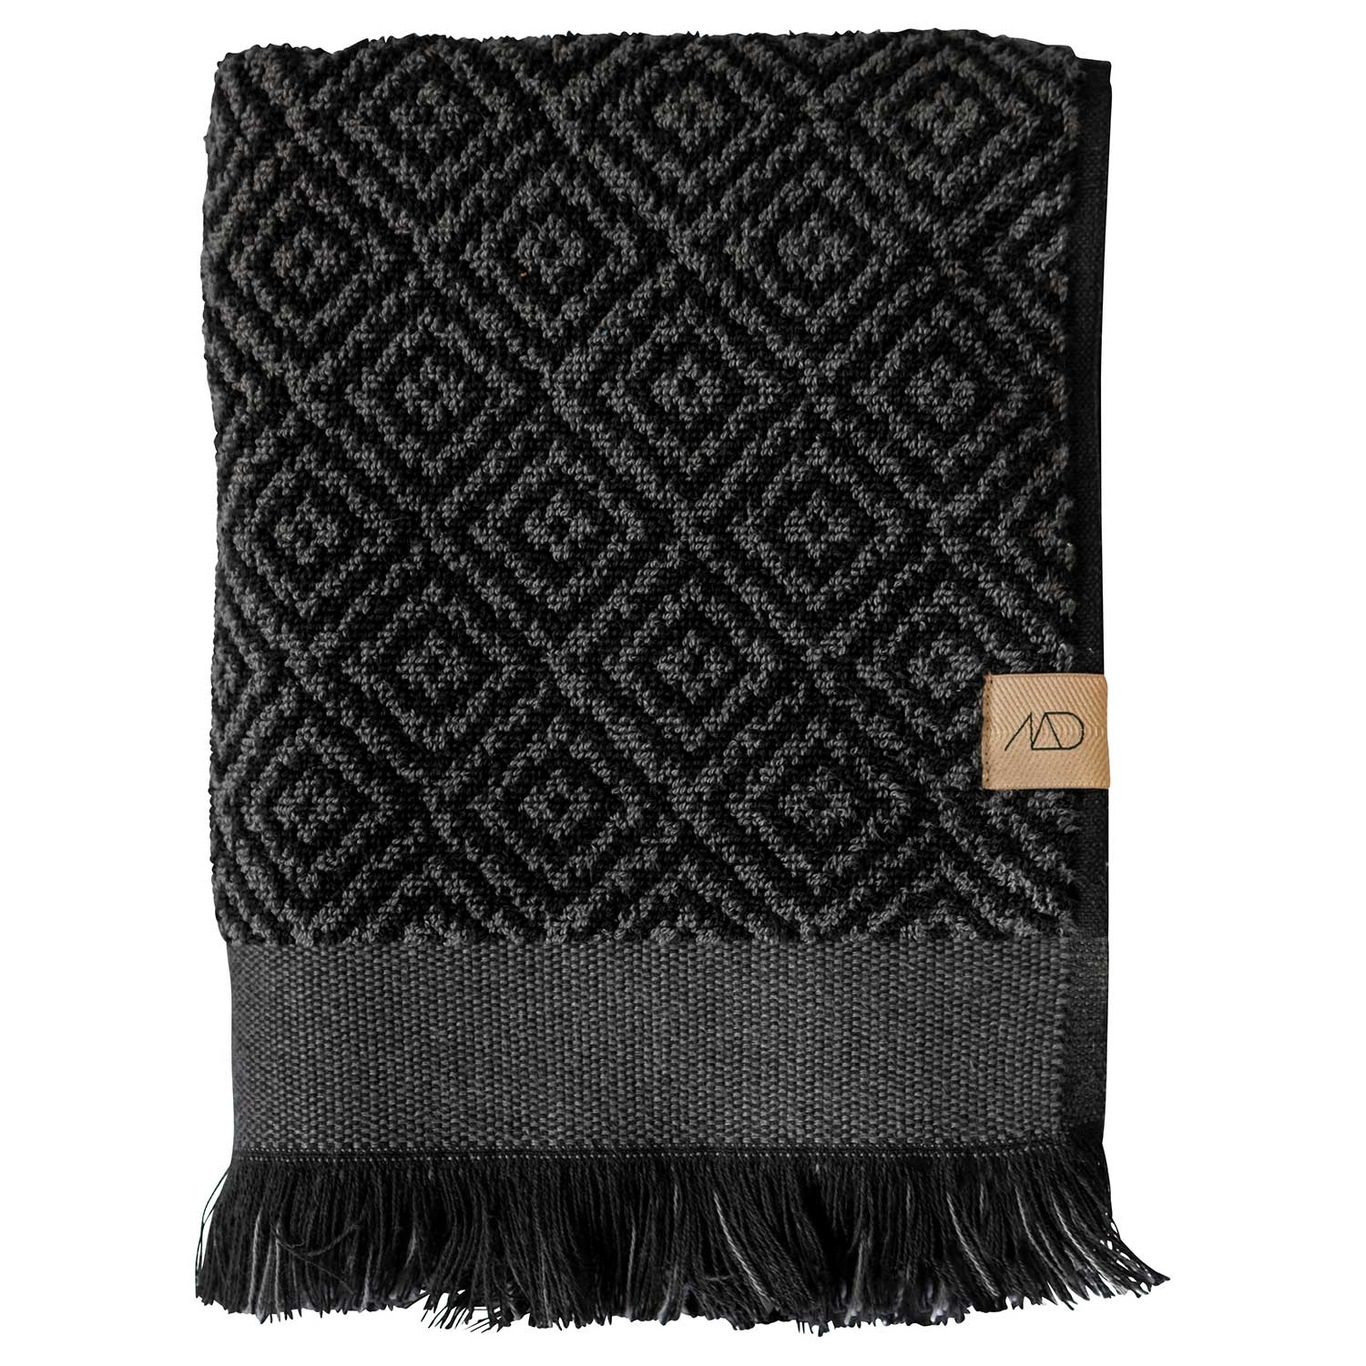 Morocco Towel 50x95 cm, Black/Grey